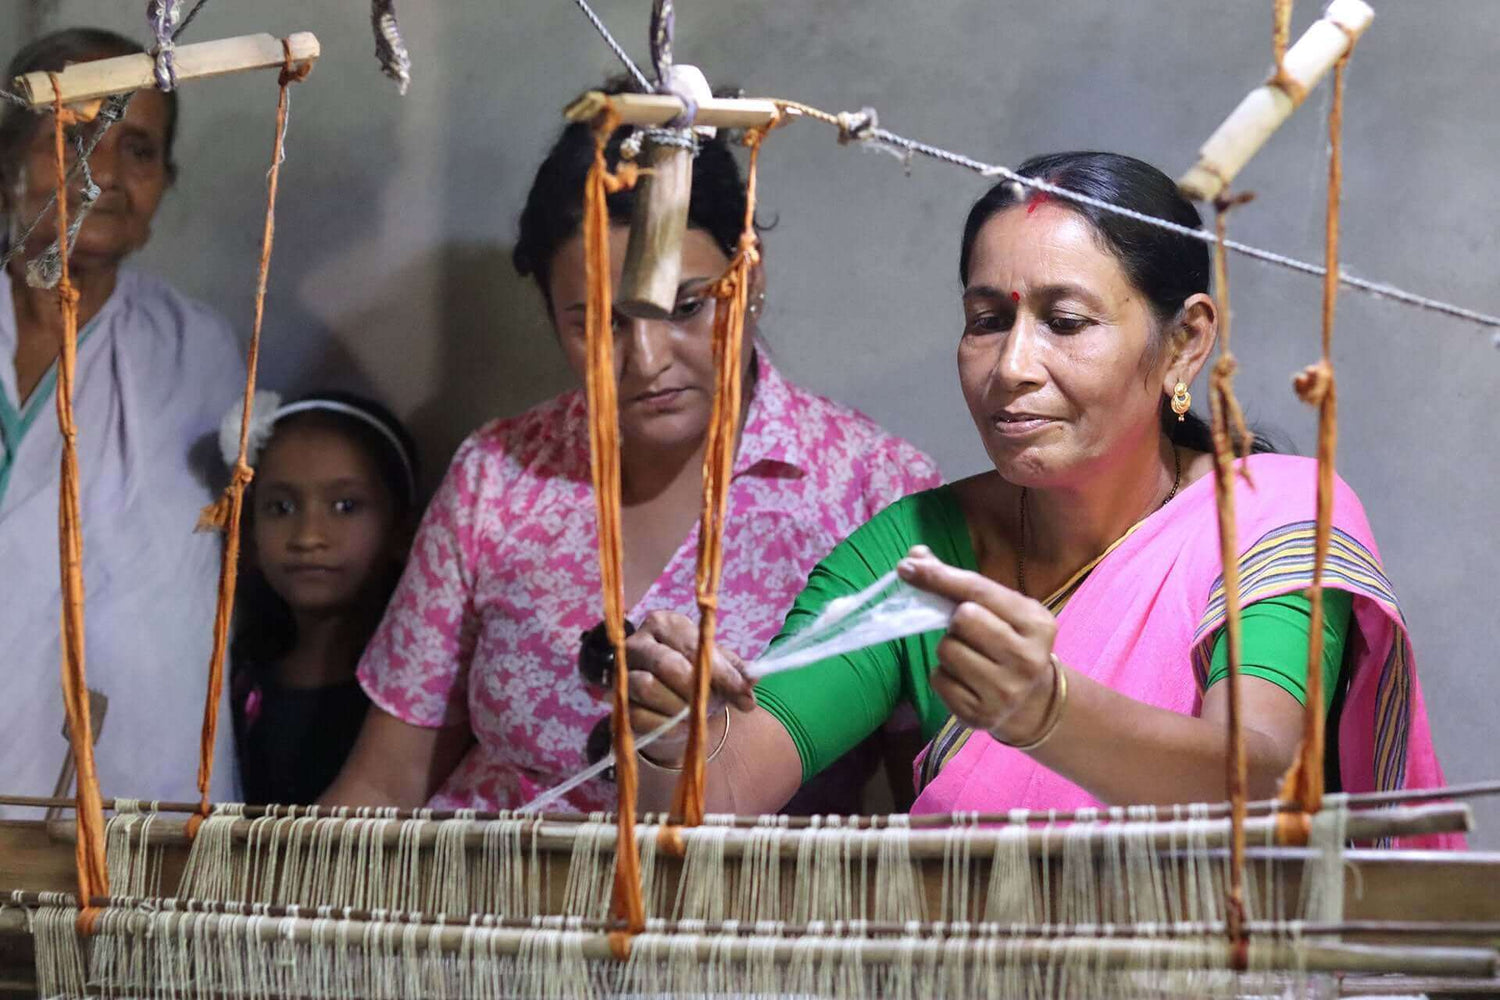 women working on handloom